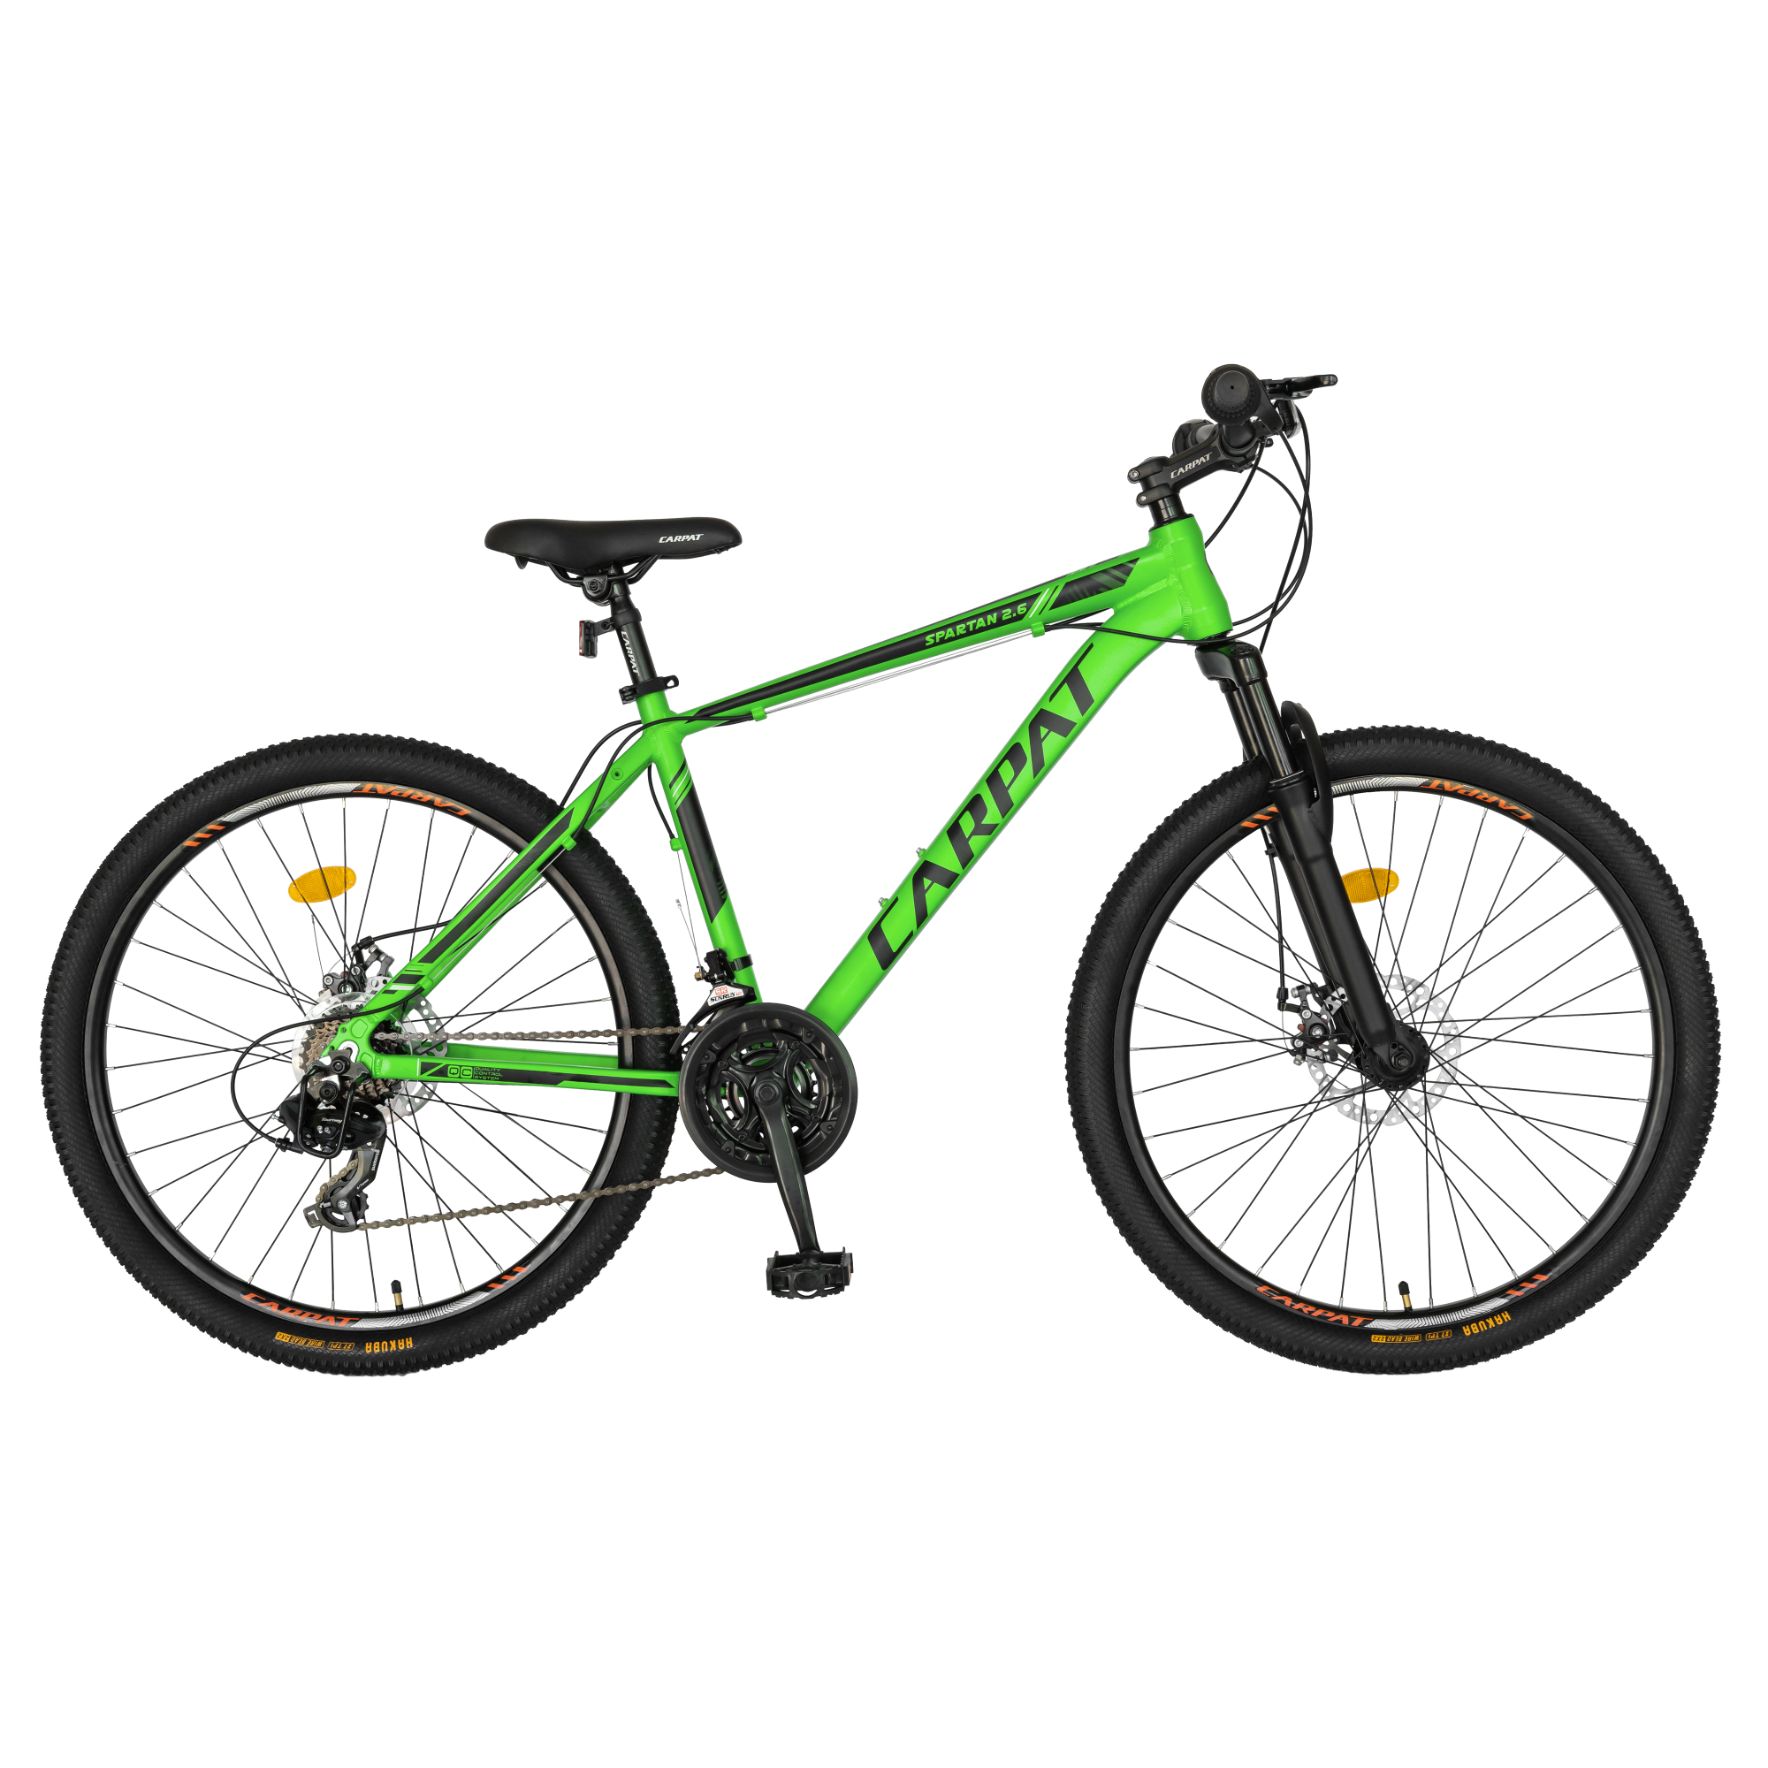 PROMO BICICLETE - Bicicleta MTB-HT Carpat Spartan C2758C 27.5", Verde/Negru, https:carpatsport.ro